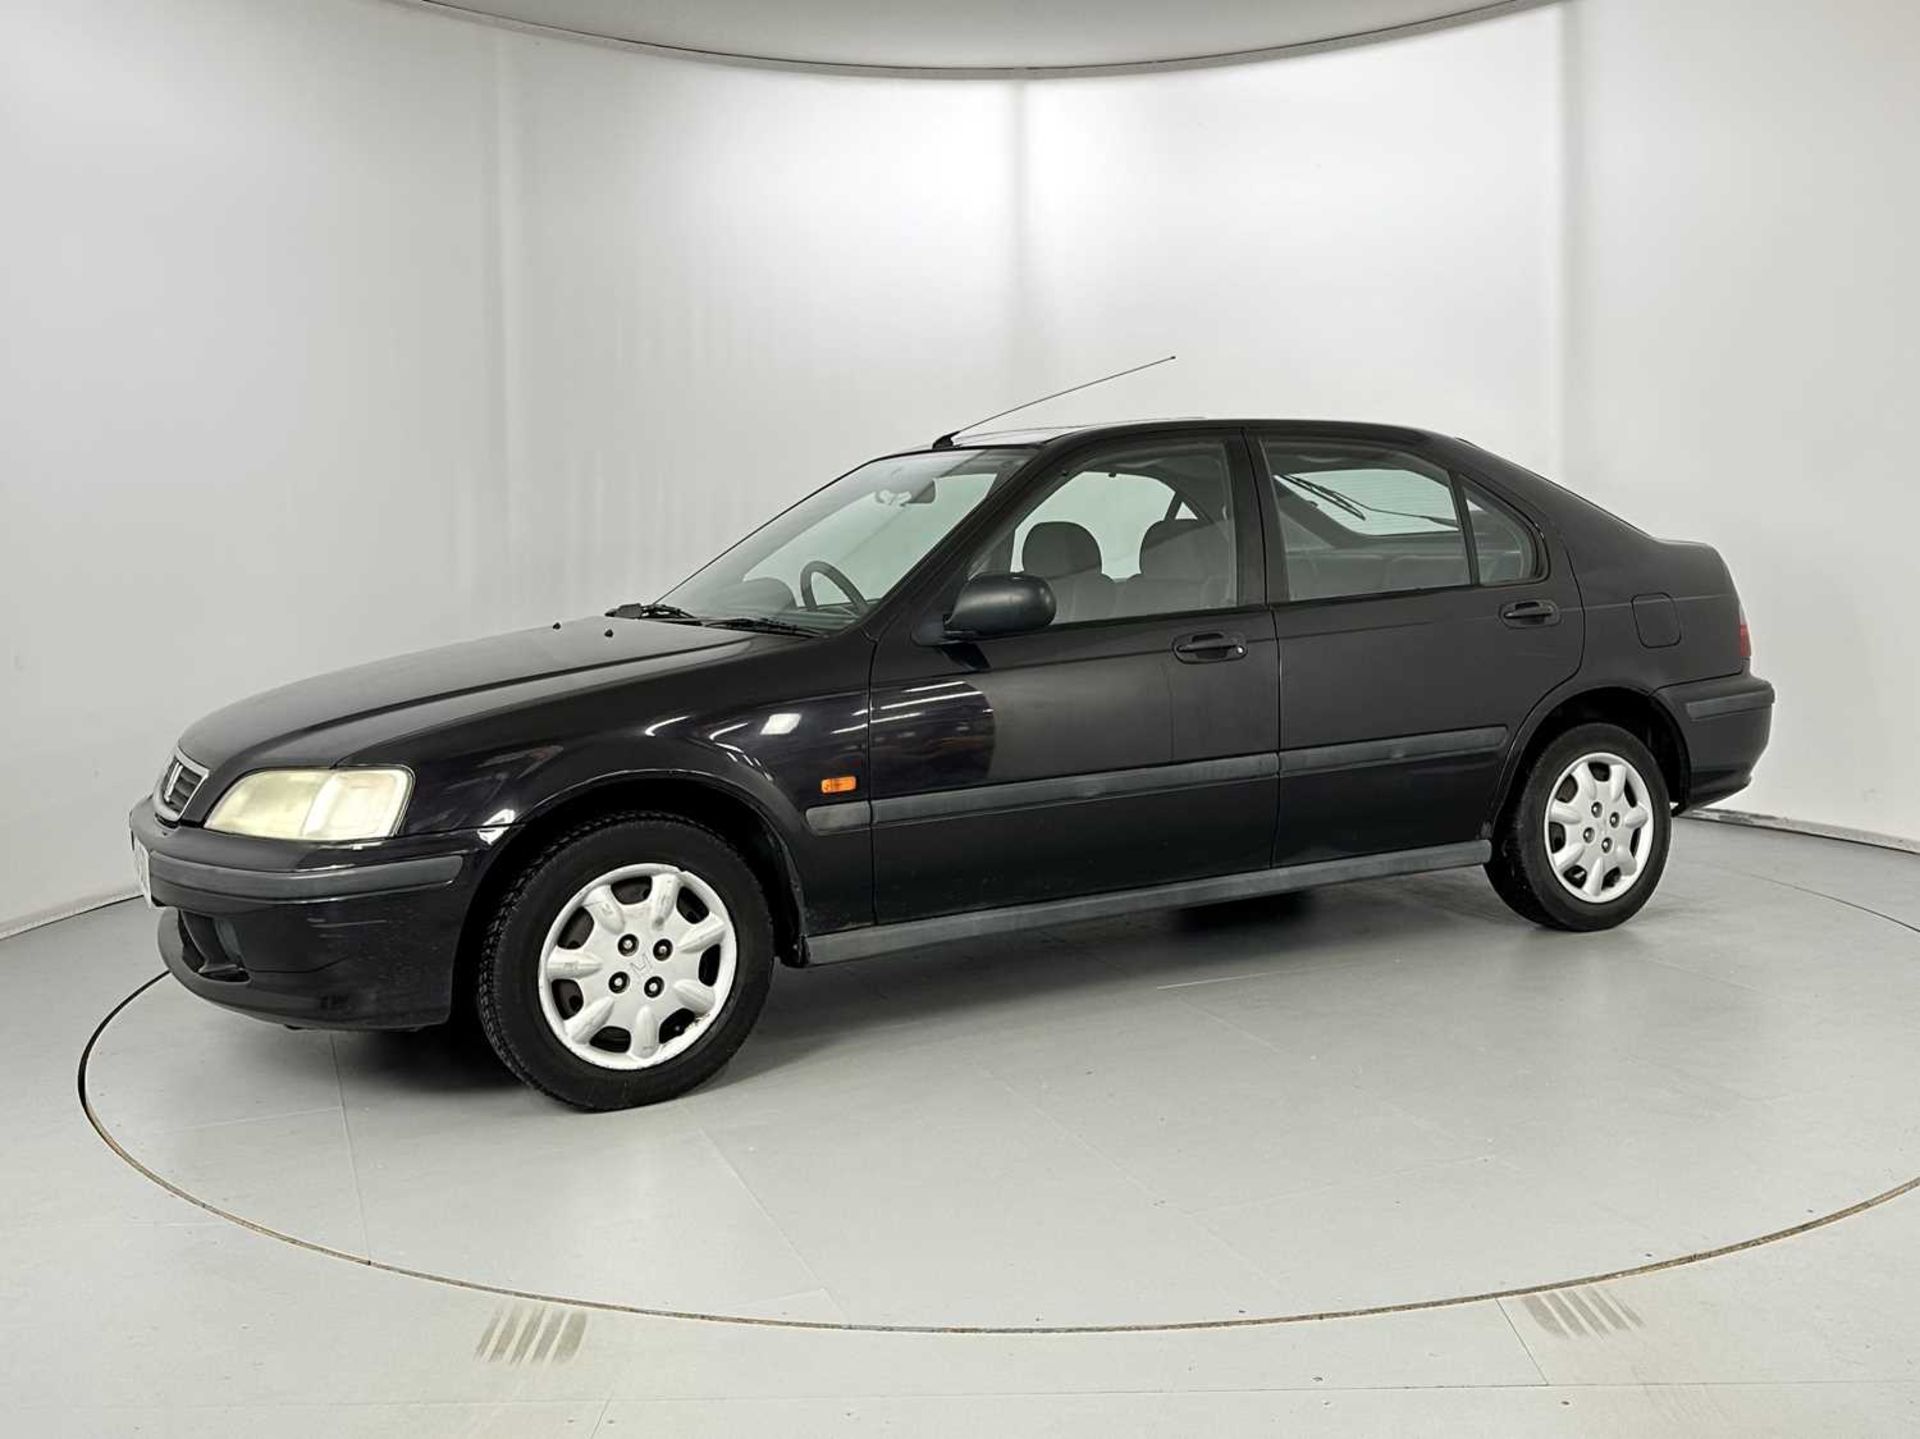 1999 Honda Civic - Image 4 of 34